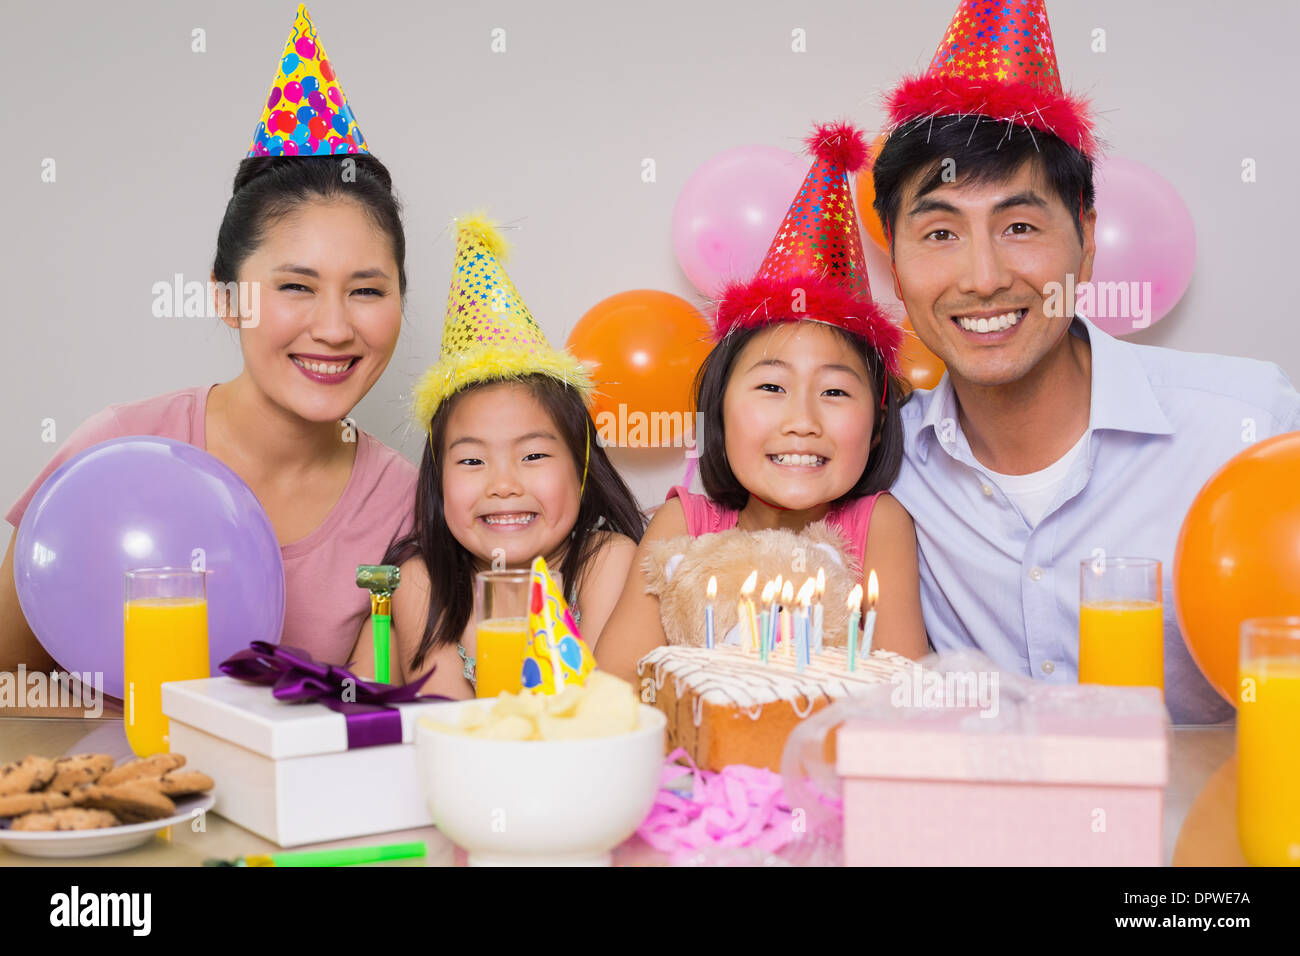 Sombrero Pastel Esponja Gorro Cumpleaños Fiesta Evento Vela